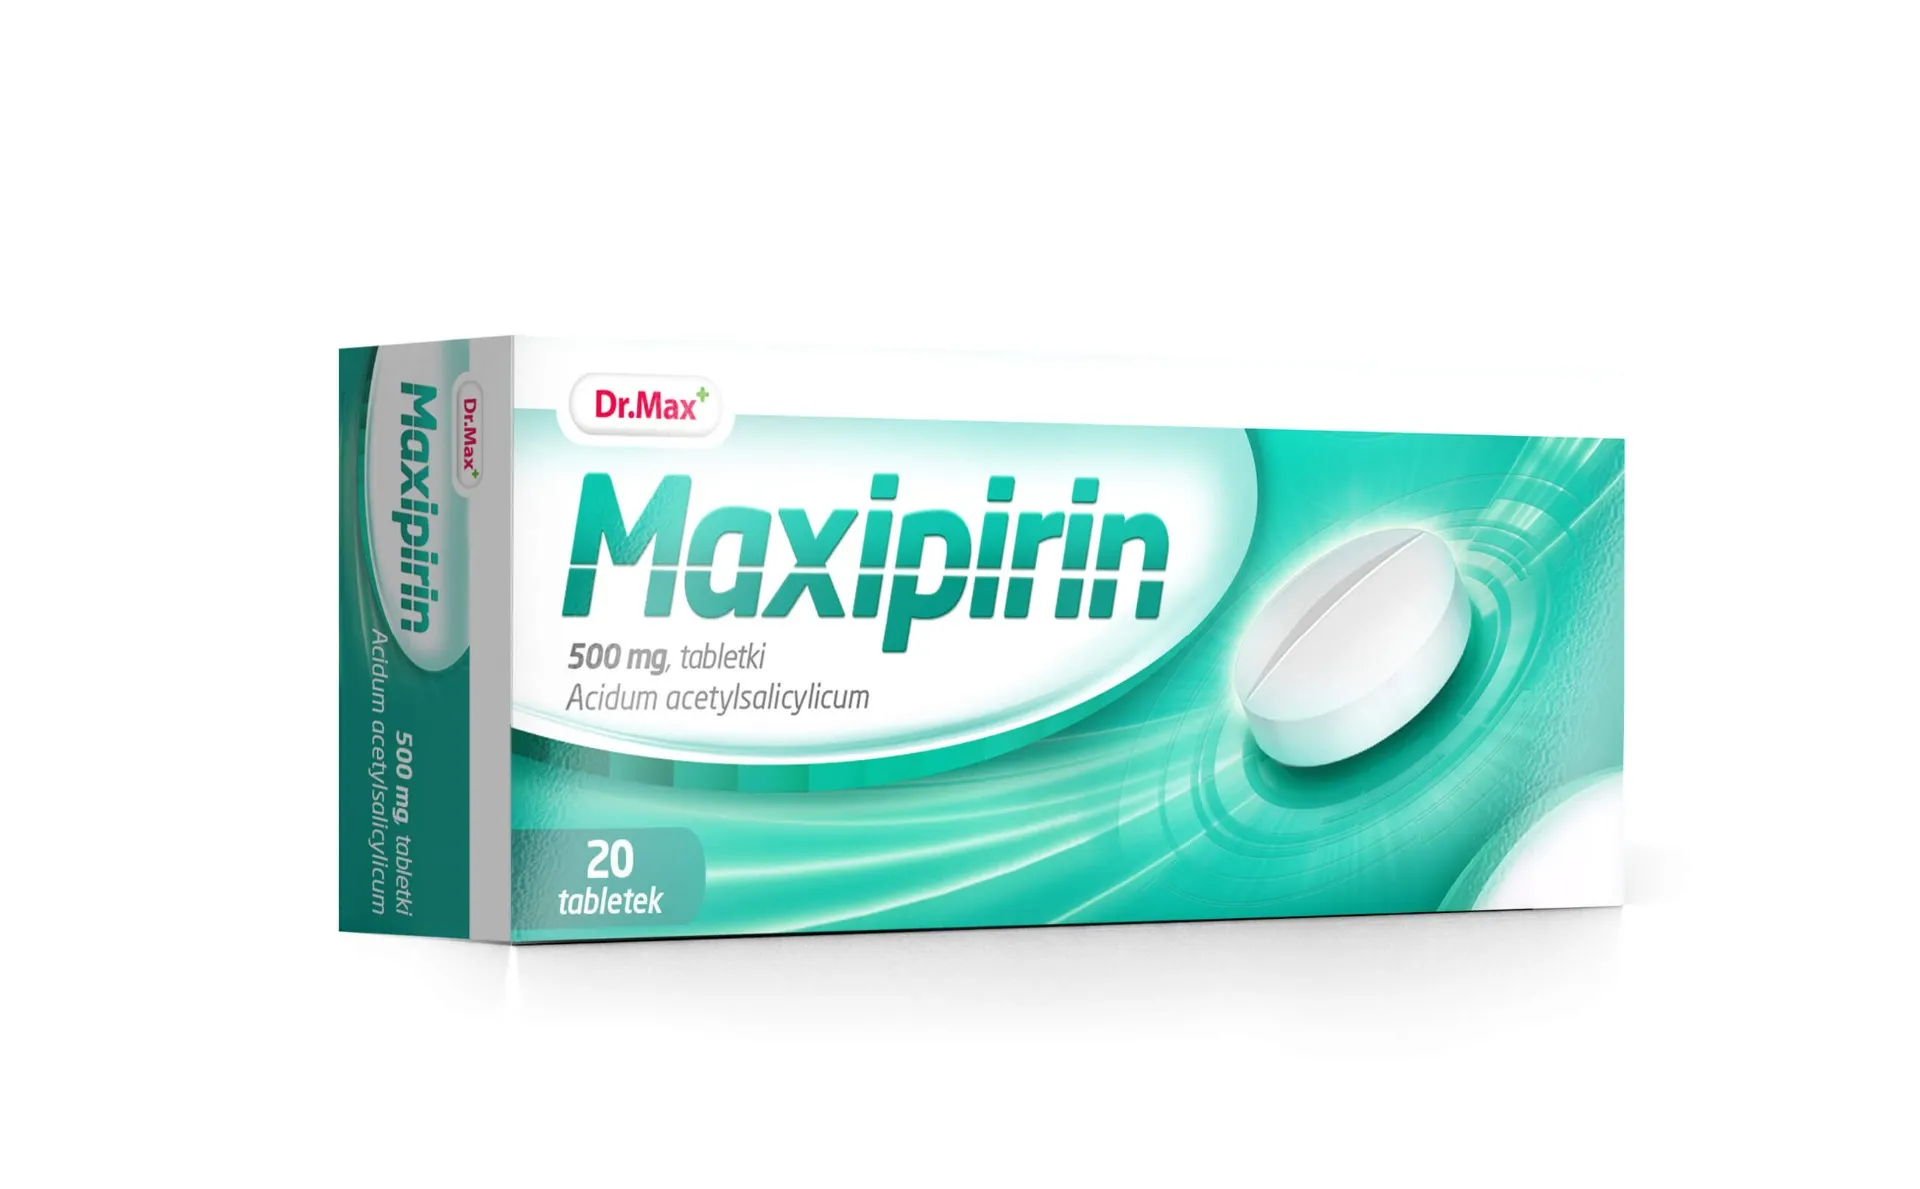 Maxipirin Dr.Max, 500 mg, 20 tabletek. Data ważności 31-03-2023